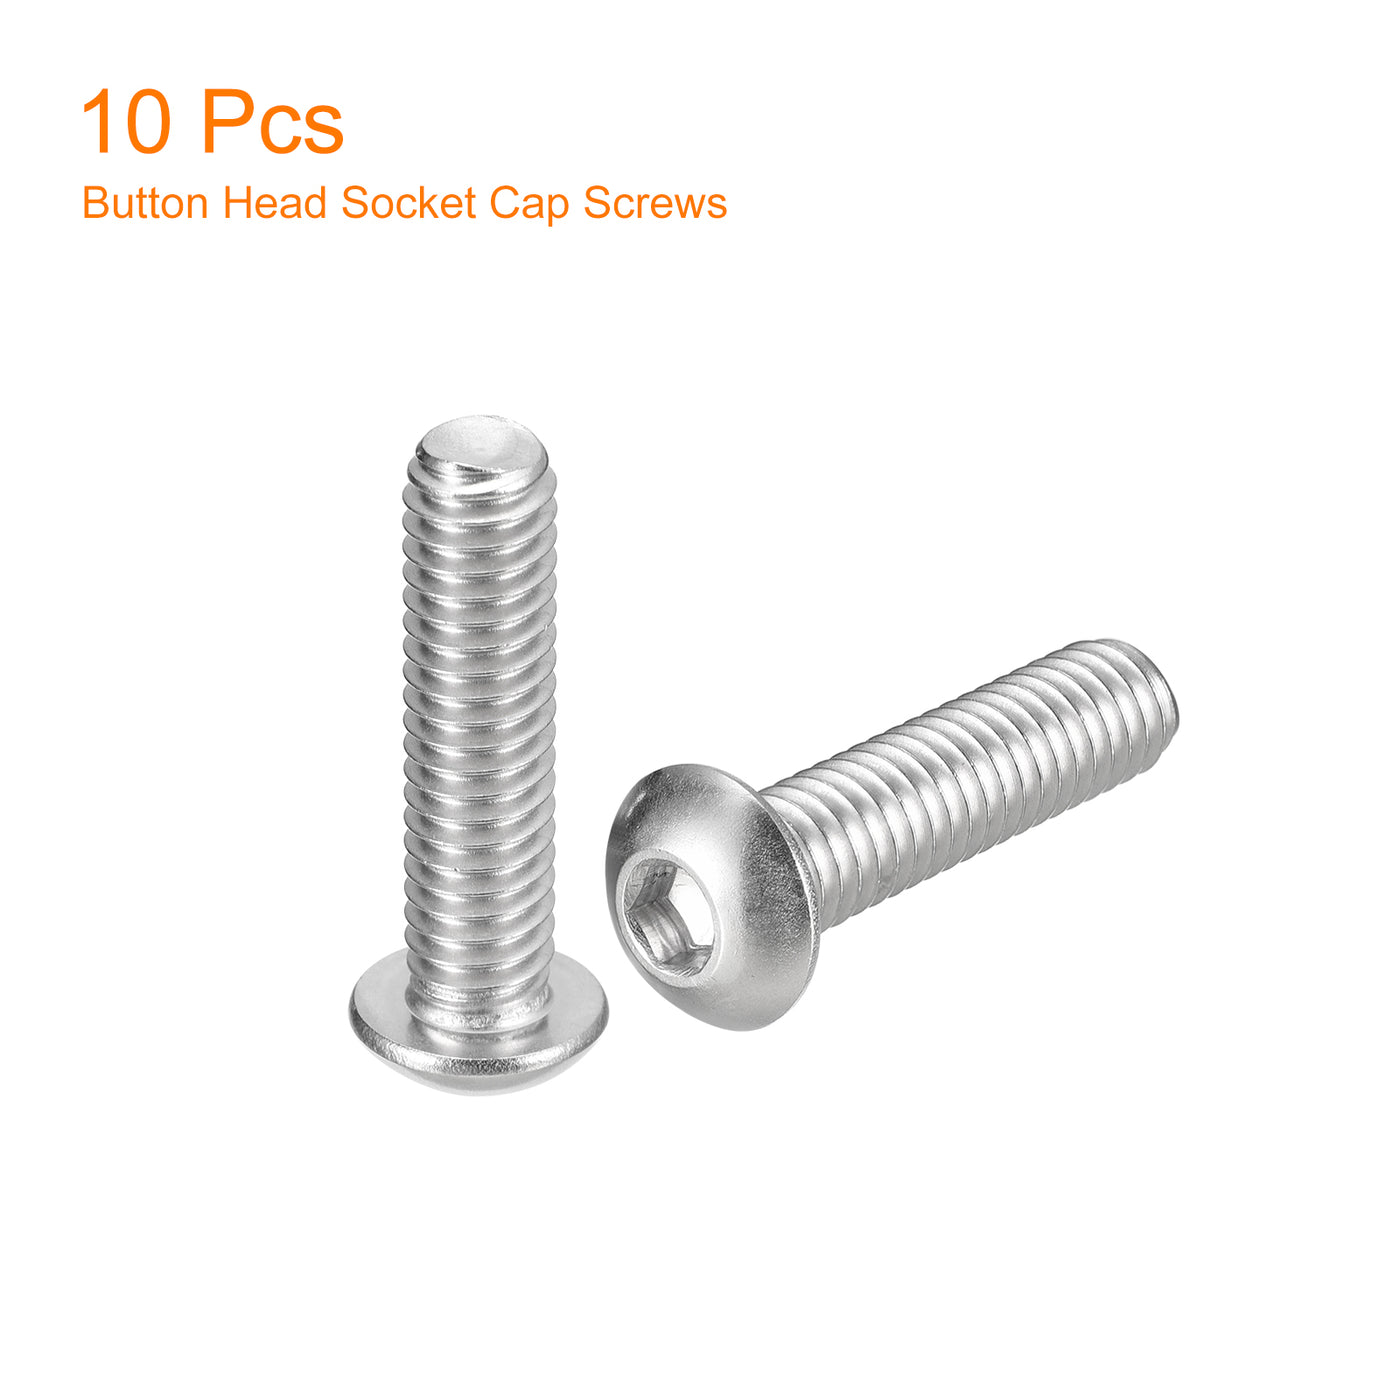 uxcell Uxcell 5/16-18x1-1/4" Button Head Socket Cap Screws, 10pcs 304 Stainless Steel Screws